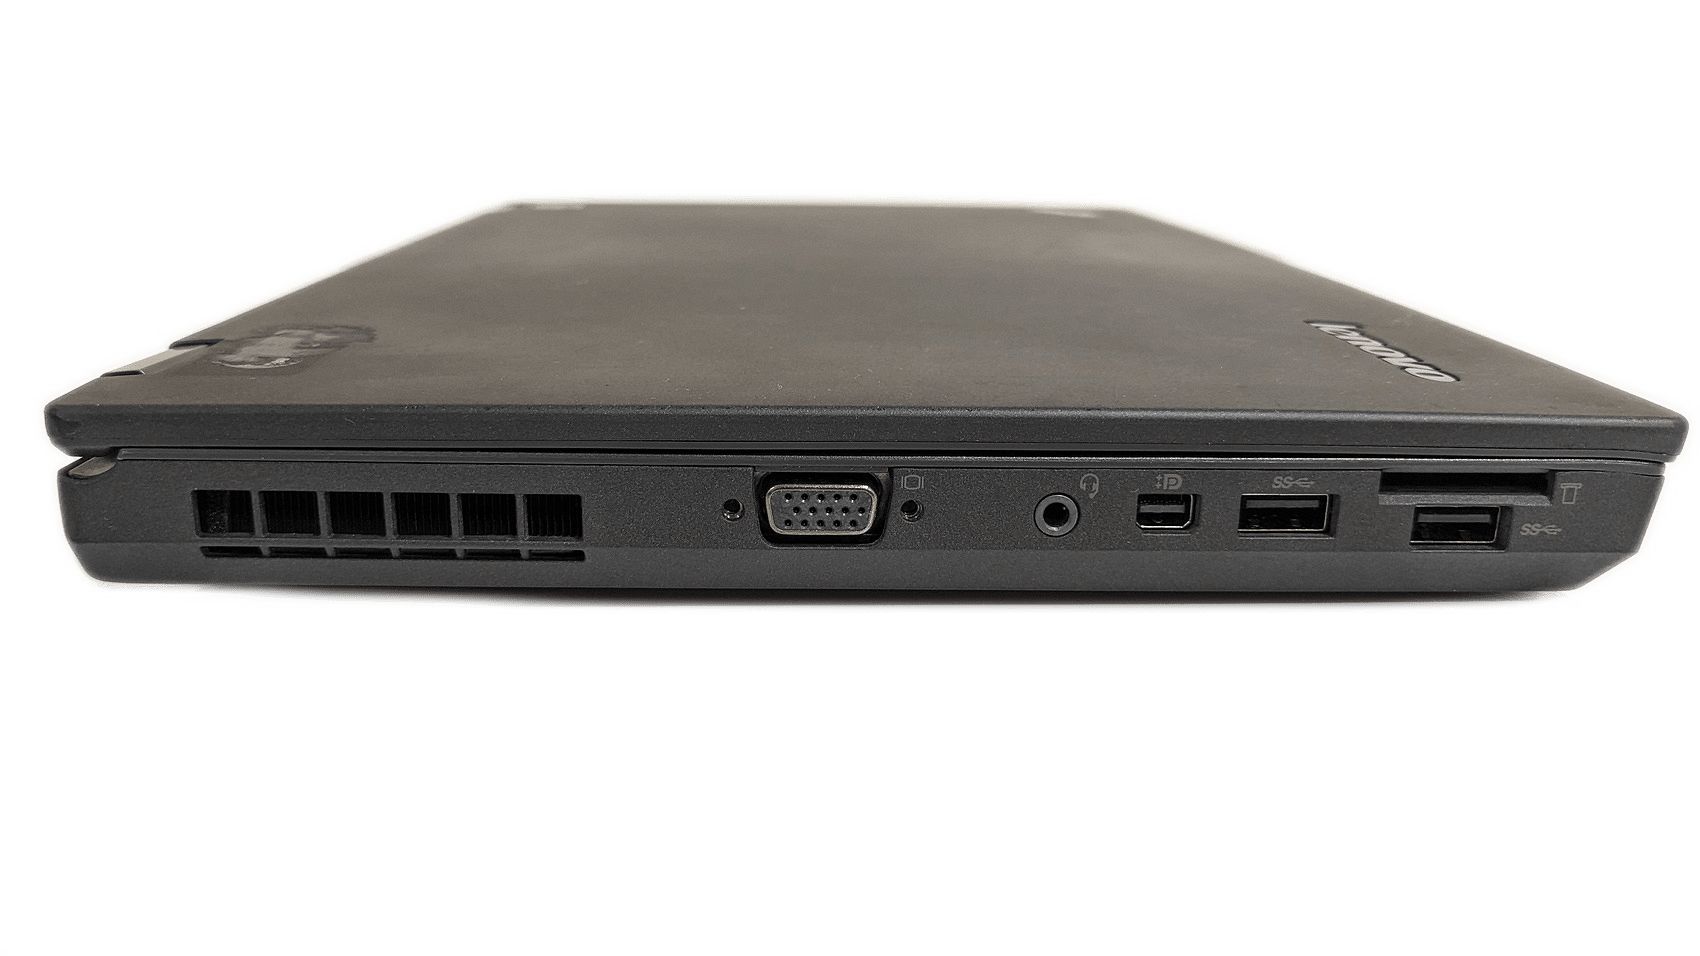 Lenovo ThinkPad T440p 14" 1920x1080 i7-4710MQ 8GB 256GB SSD GT 730M